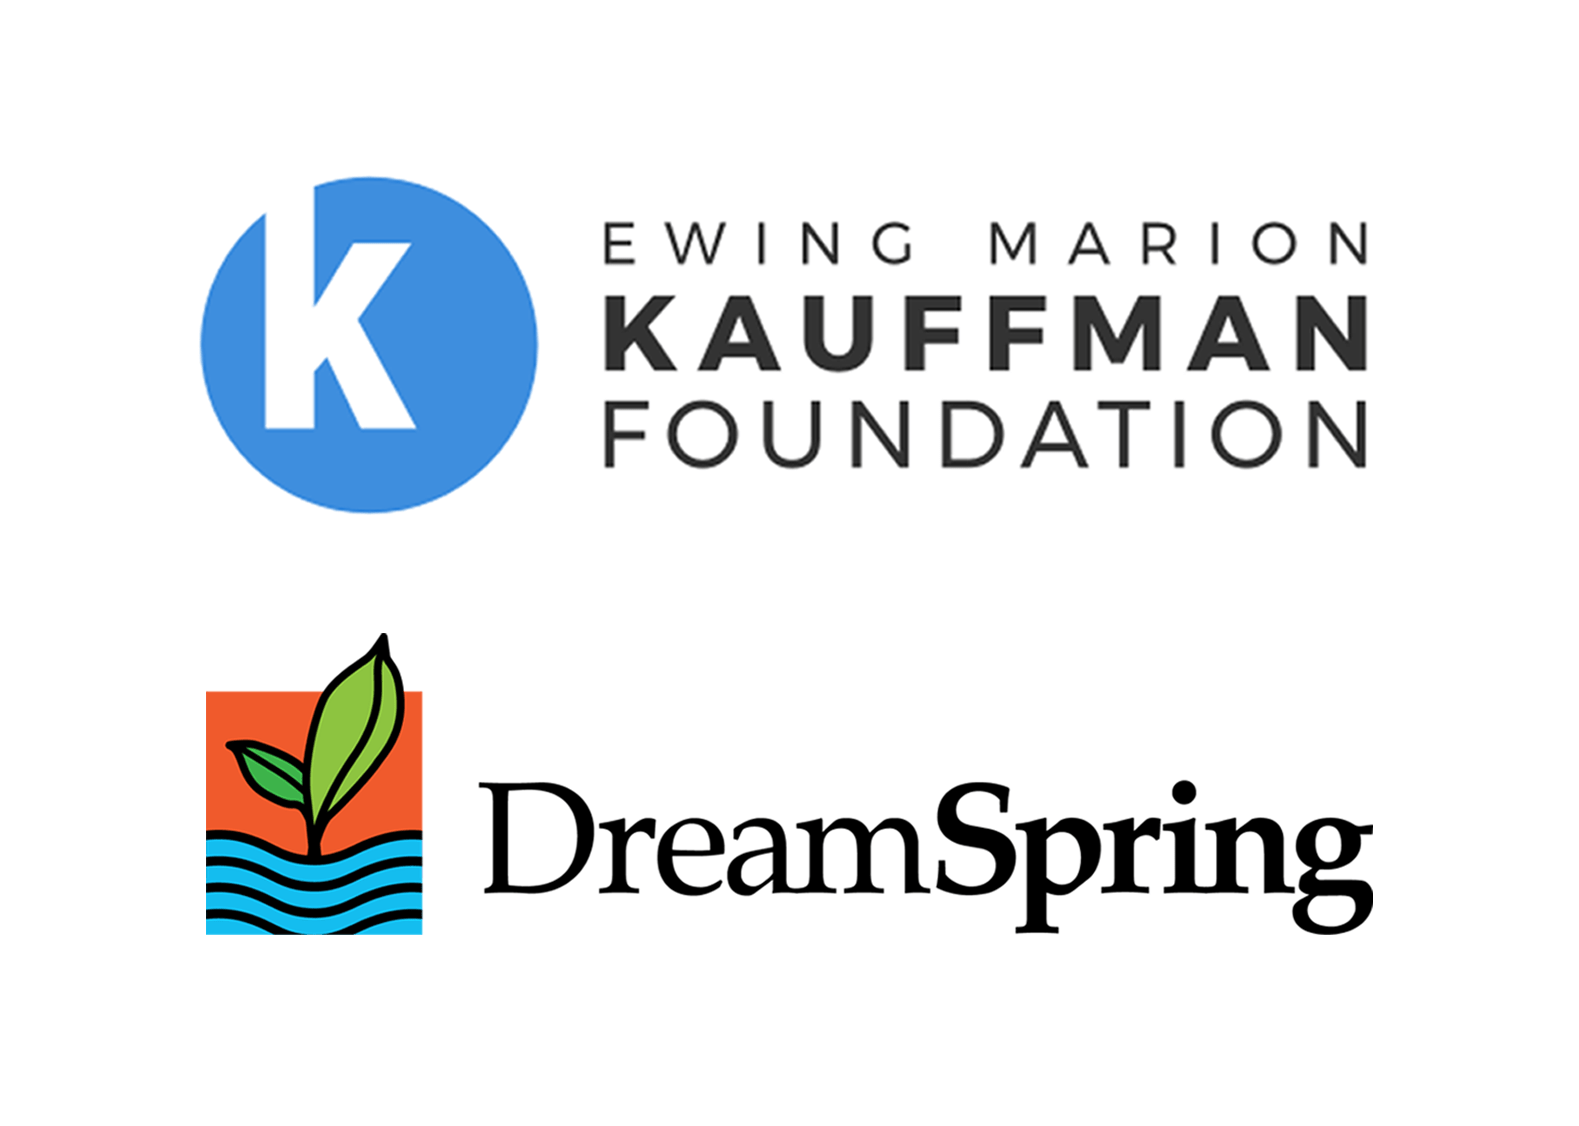 Kauffman Foundation and DreamSpring logos